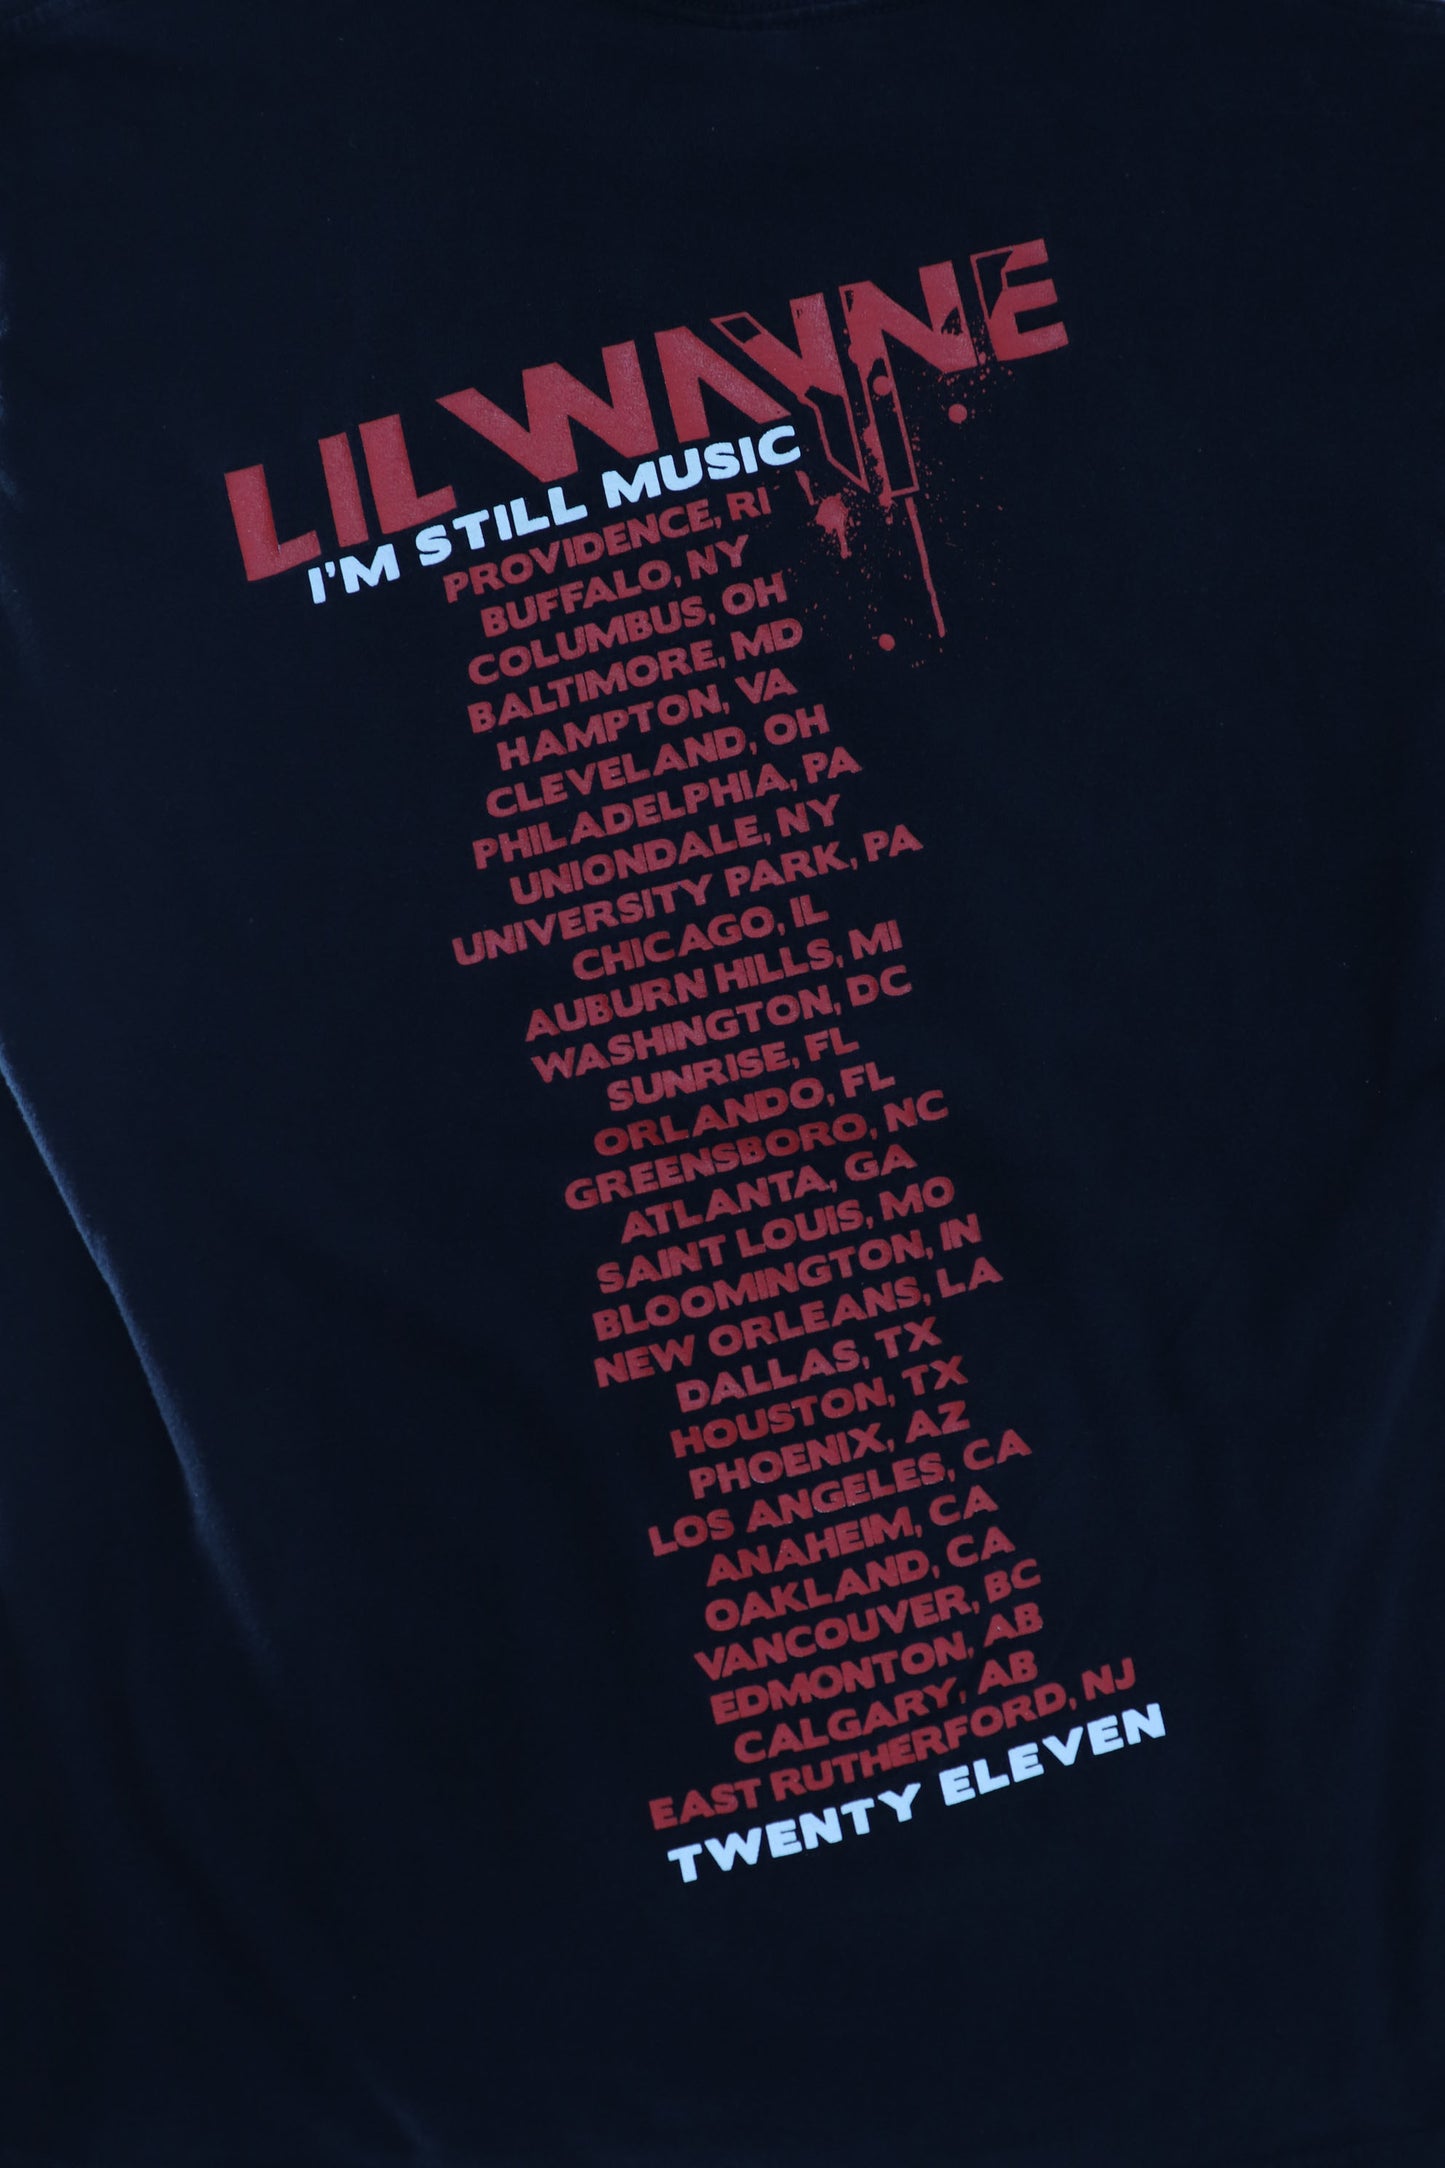 LIL WAYNE IM STILL MUSIC TOUR 2011